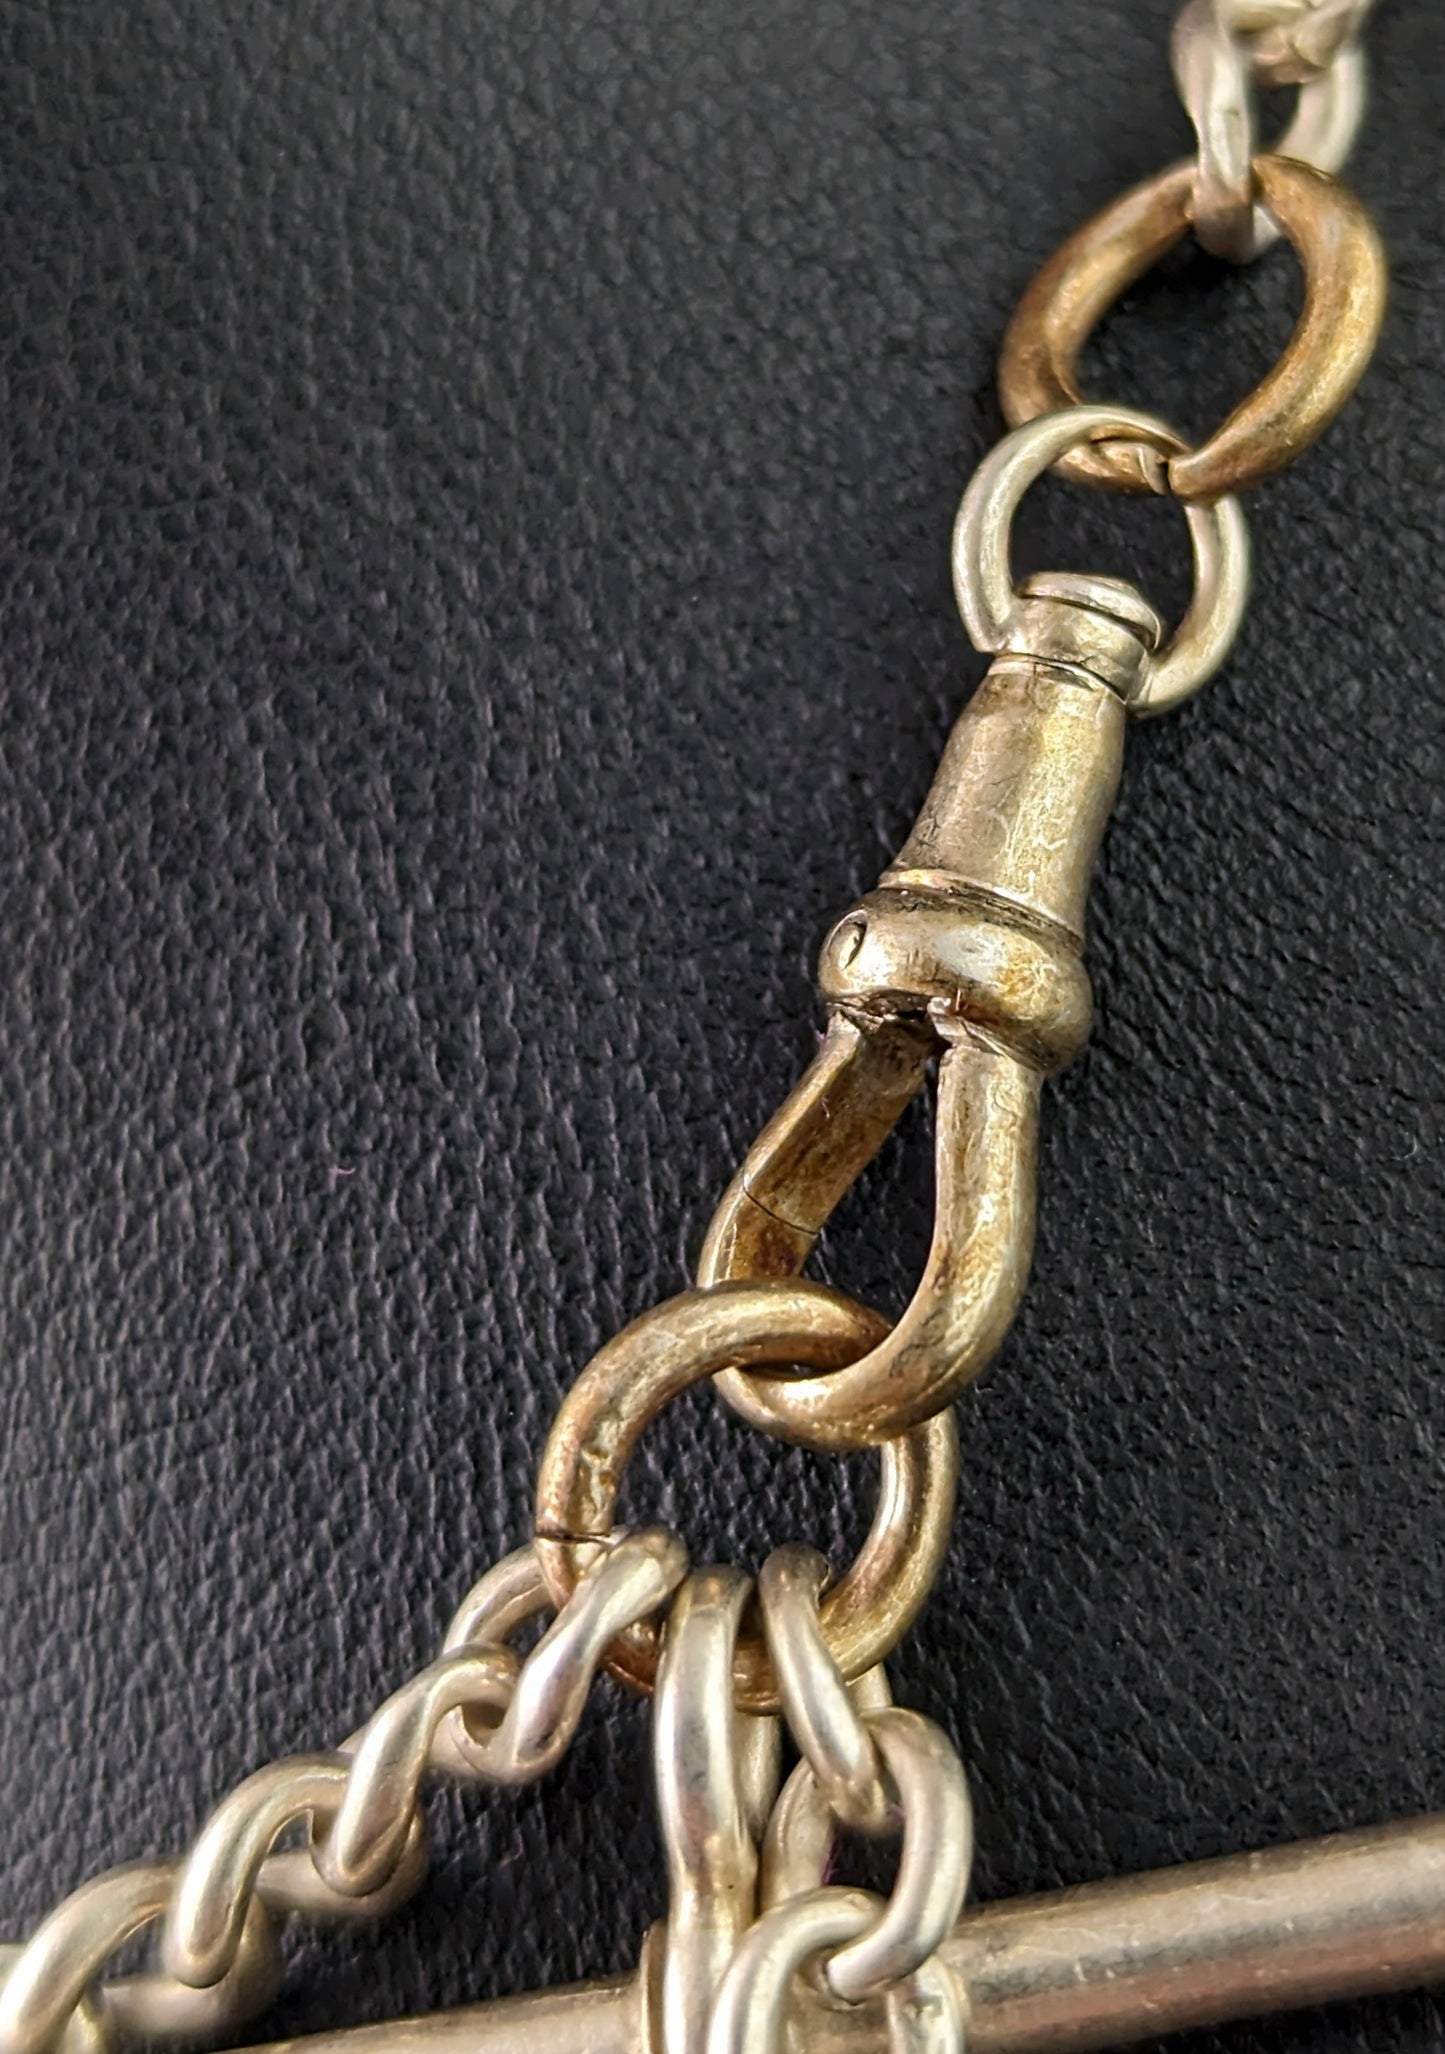 Antique Sterling silver Albert chain, watch chain